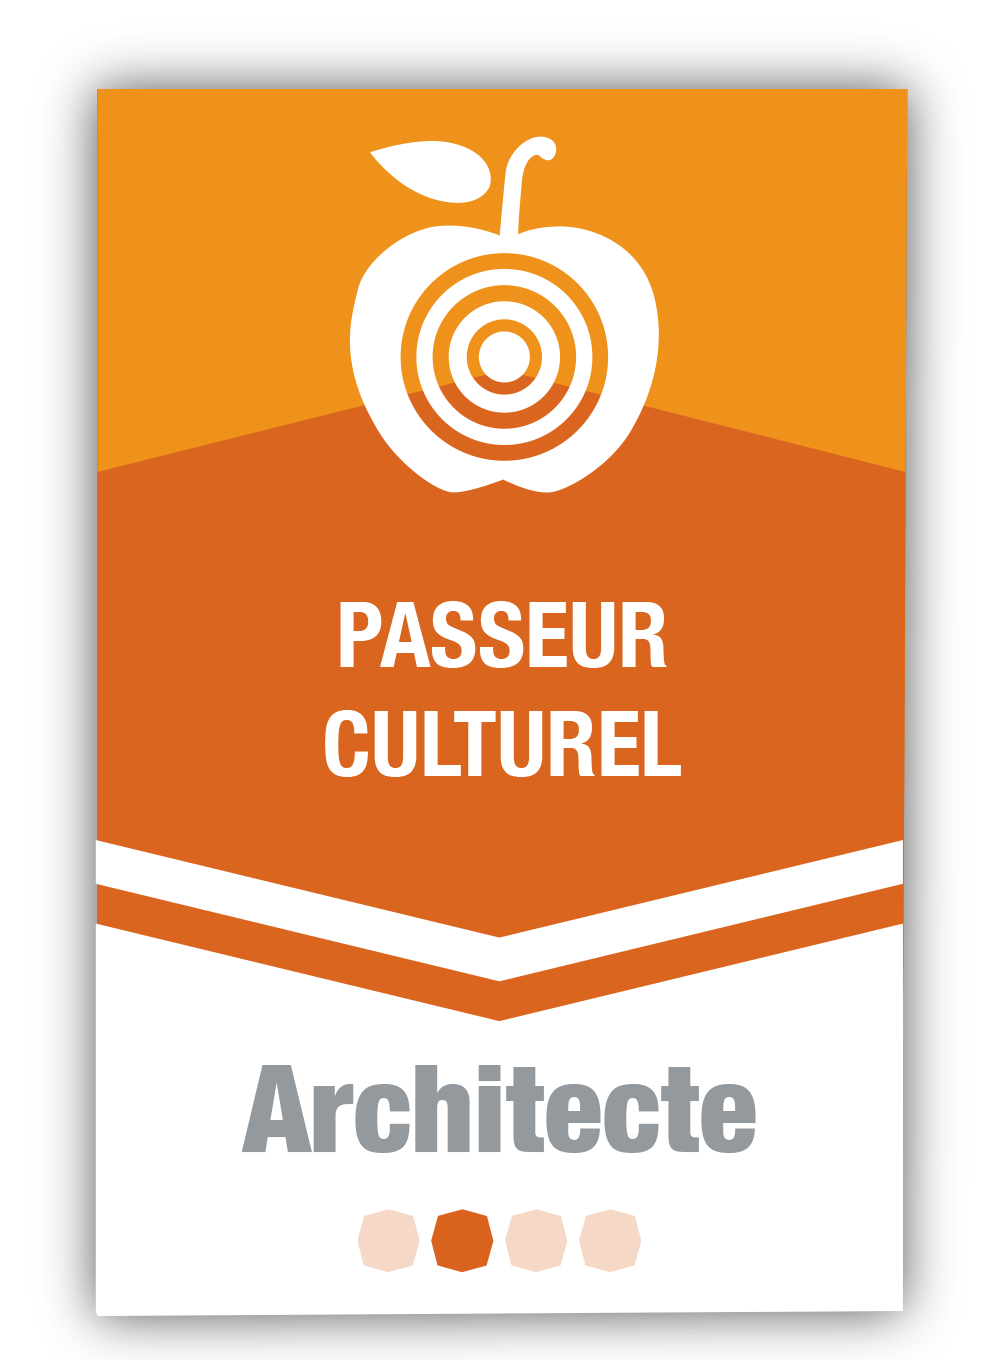 Passeur culturel 2 – Architecte